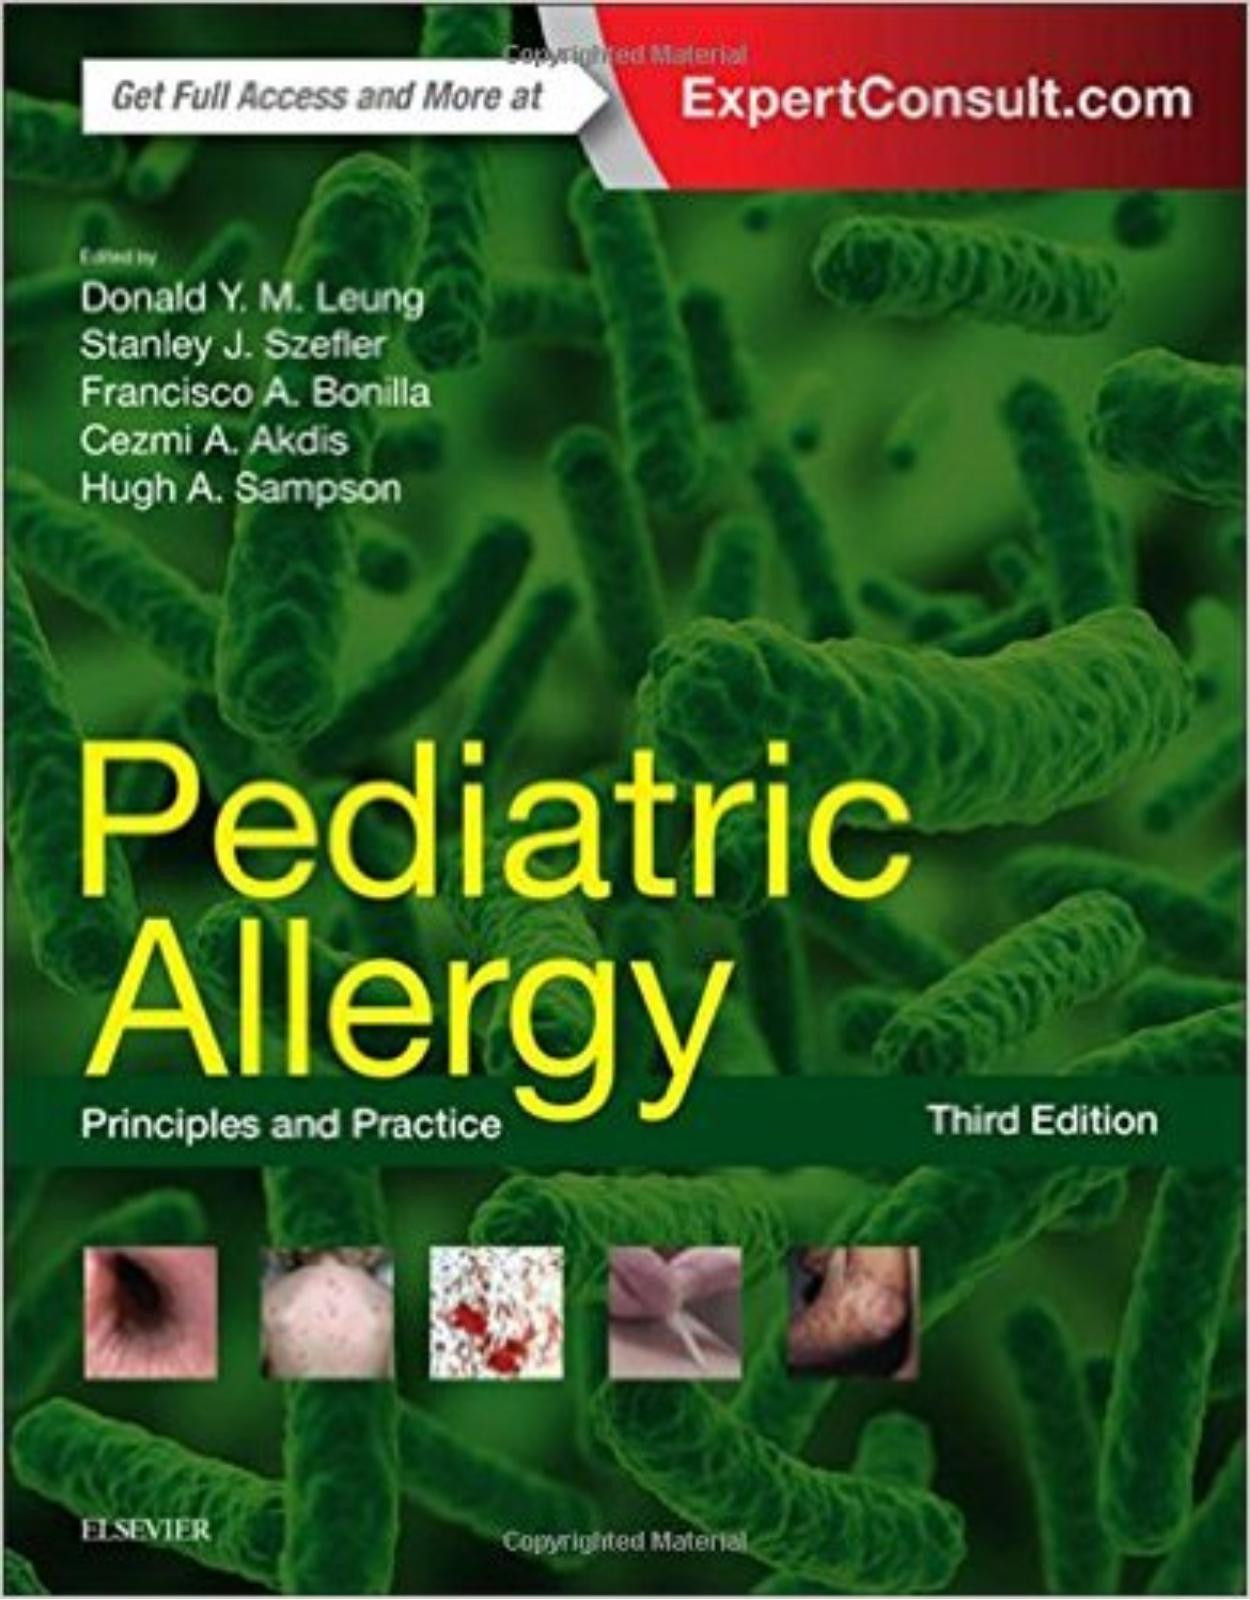 Pediatric Allergy: Principles and Practice, 3e 3rd Edition